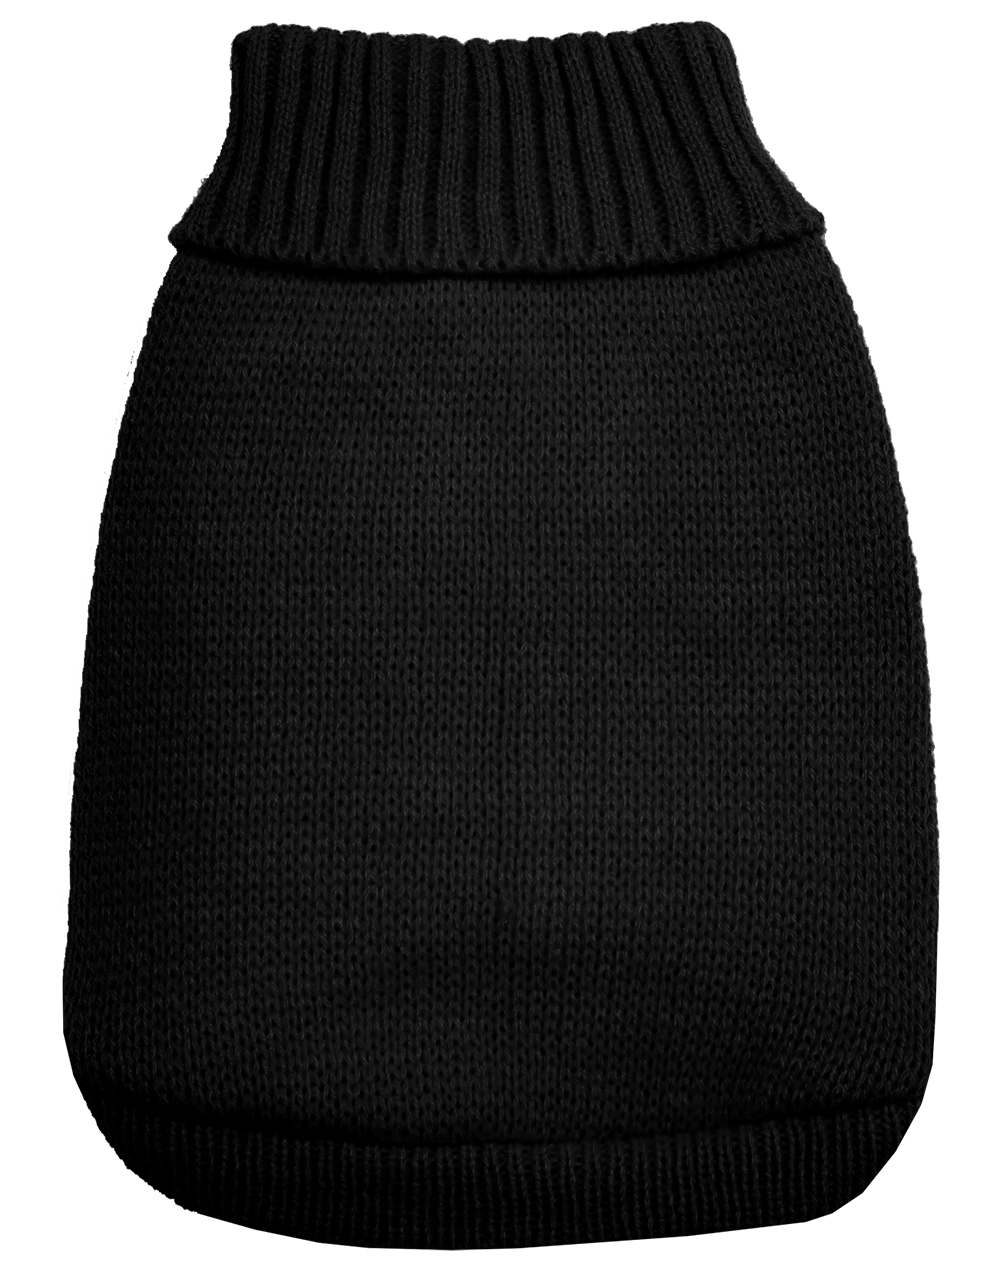 Knit Pet Sweater Black Size 4X